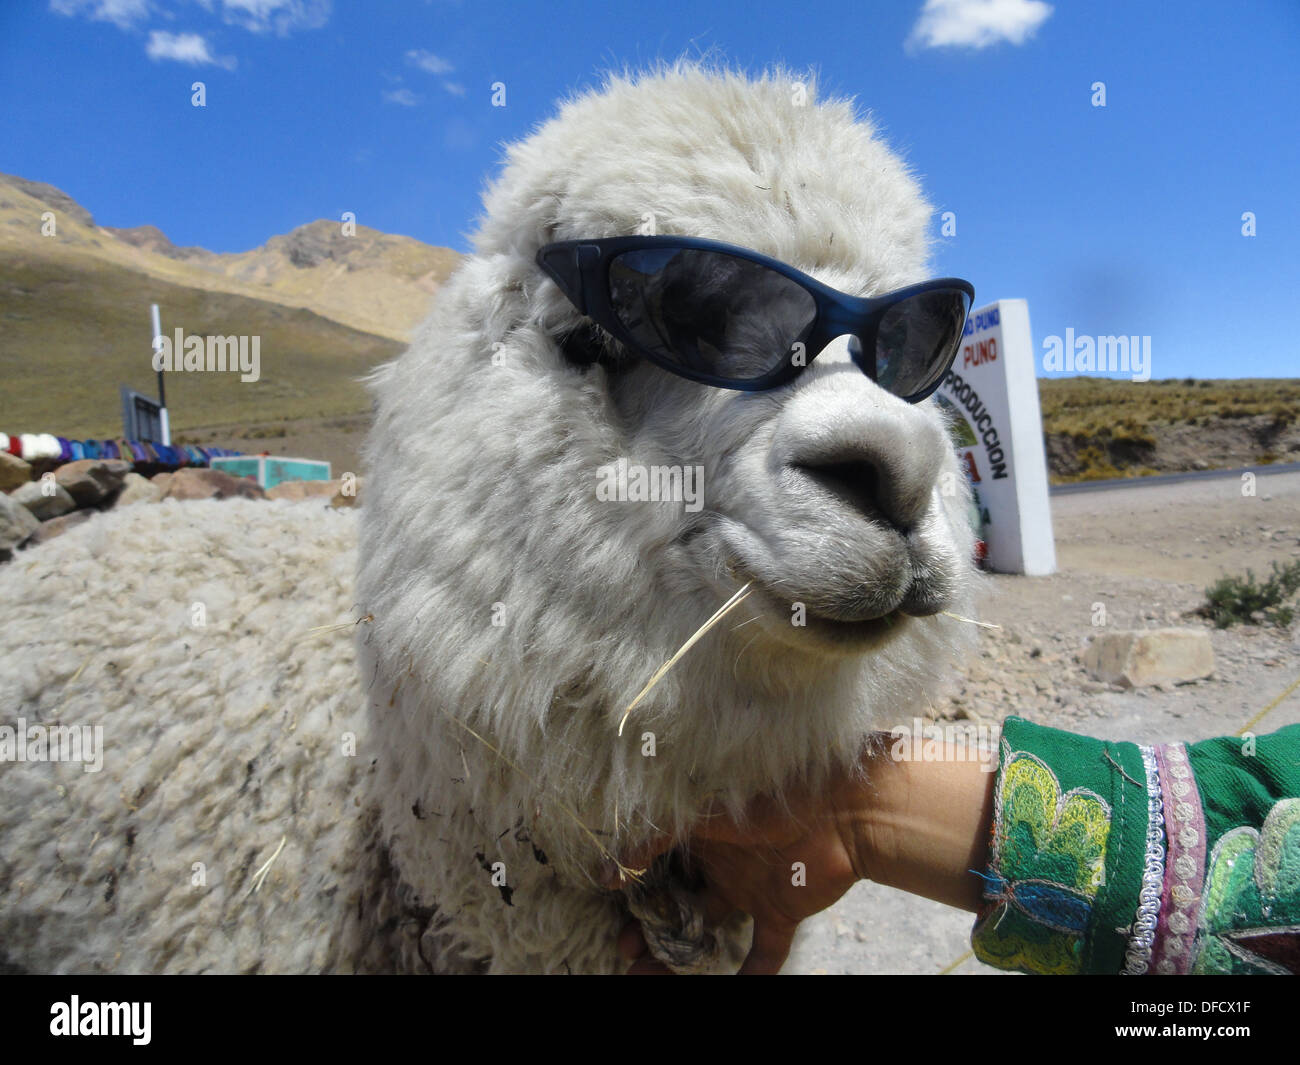 Llama wearing sunglasses -Fotos und -Bildmaterial in hoher Auflösung – Alamy